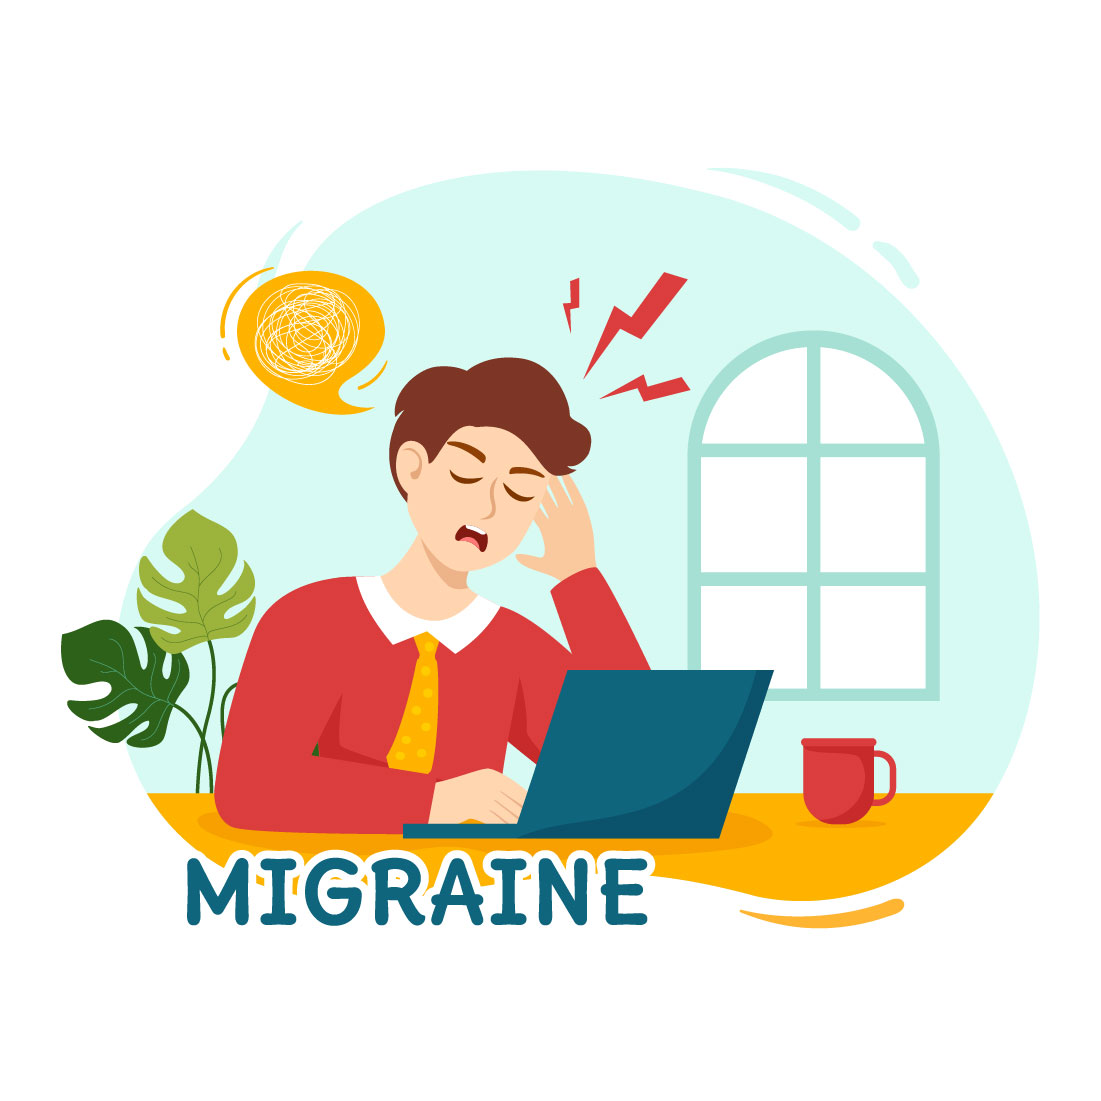 13 Migraine Vector Illustration preview image.